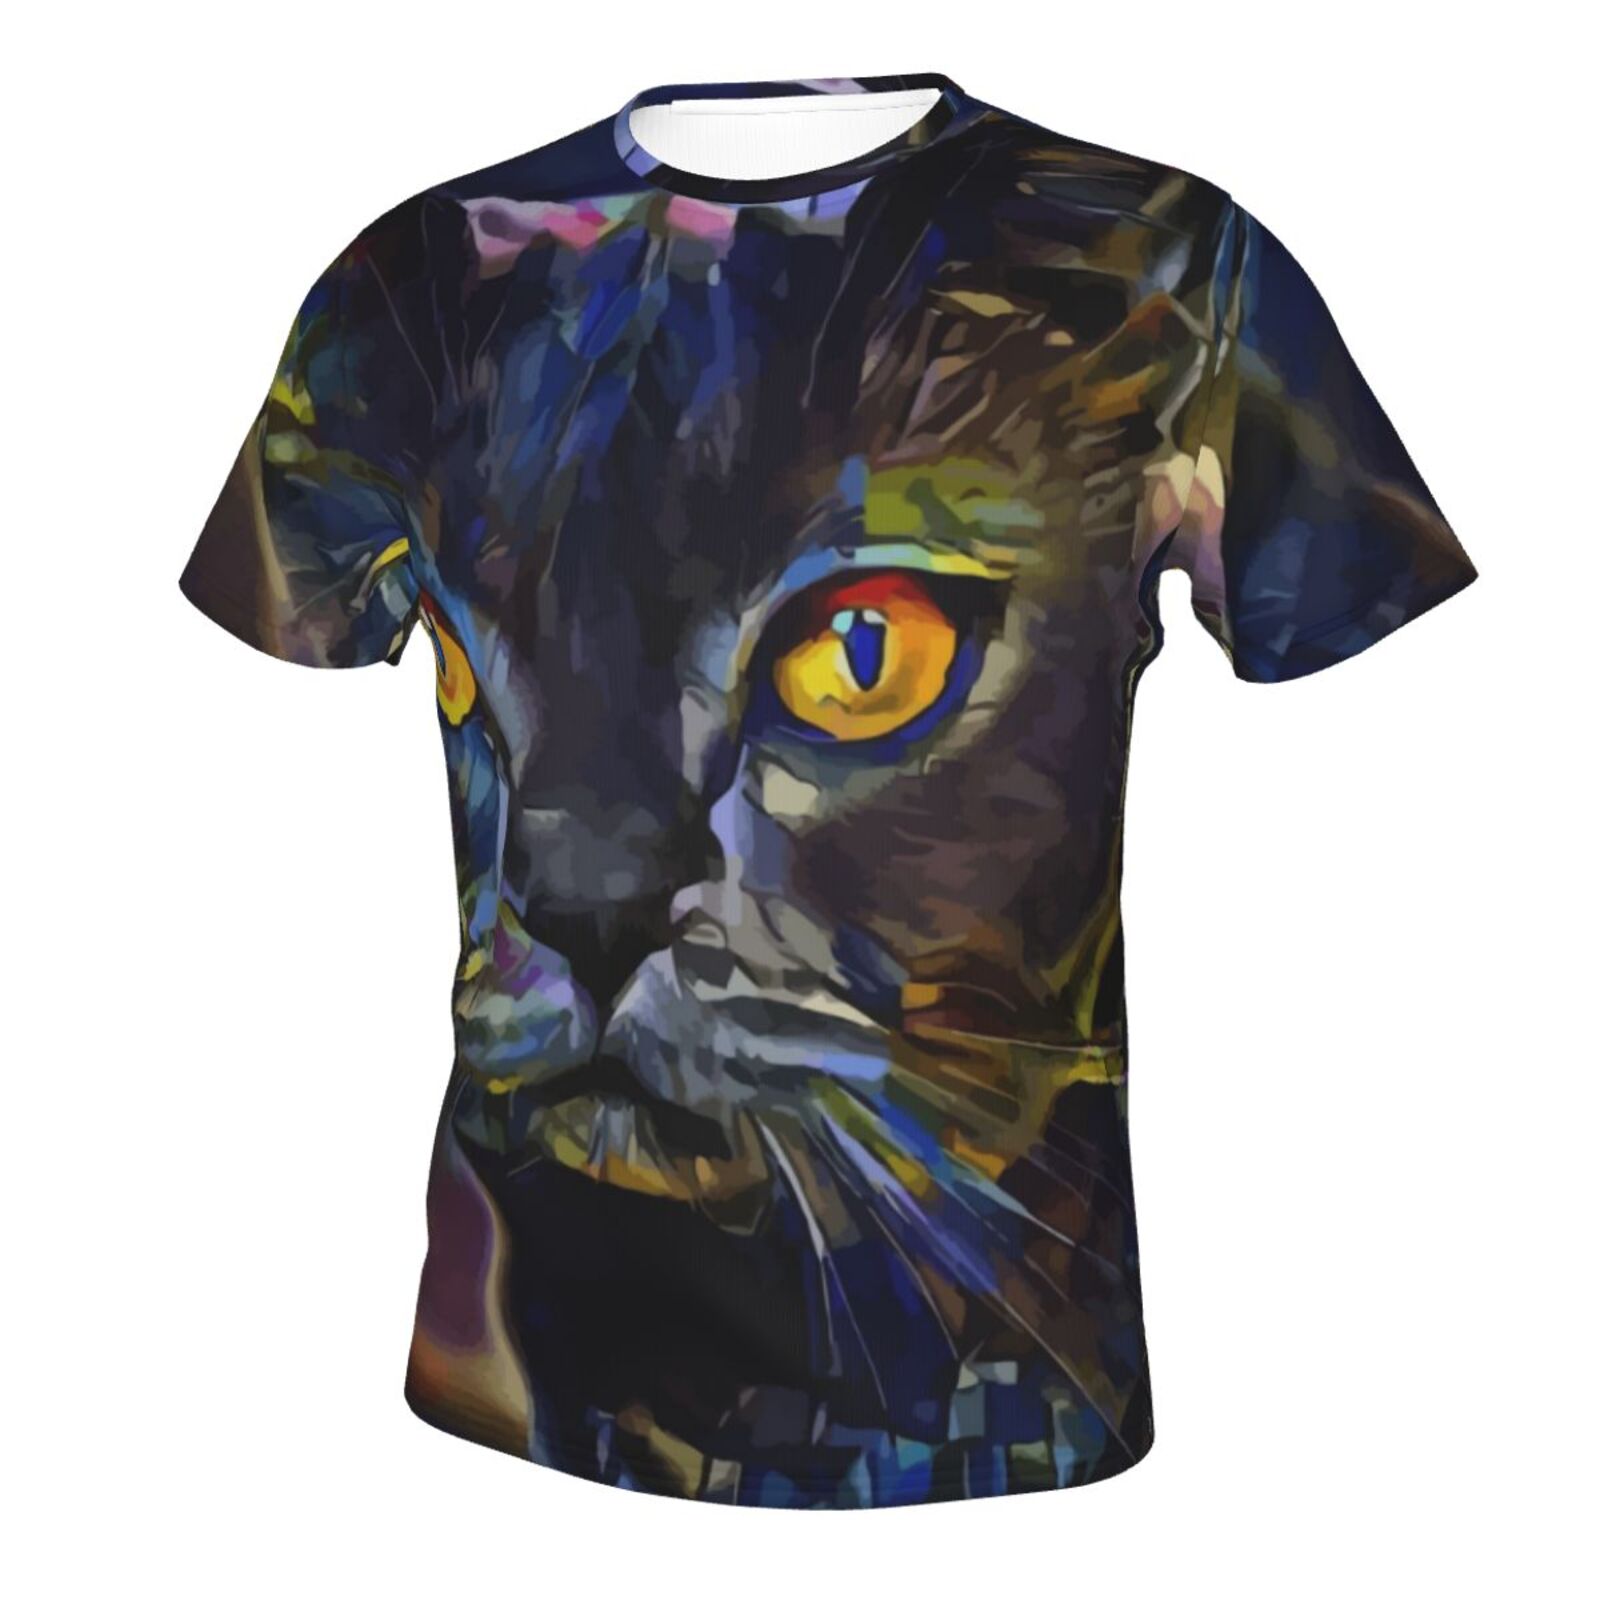 Tango Katze Medien Mischen Elemente Klassisch T Shirt